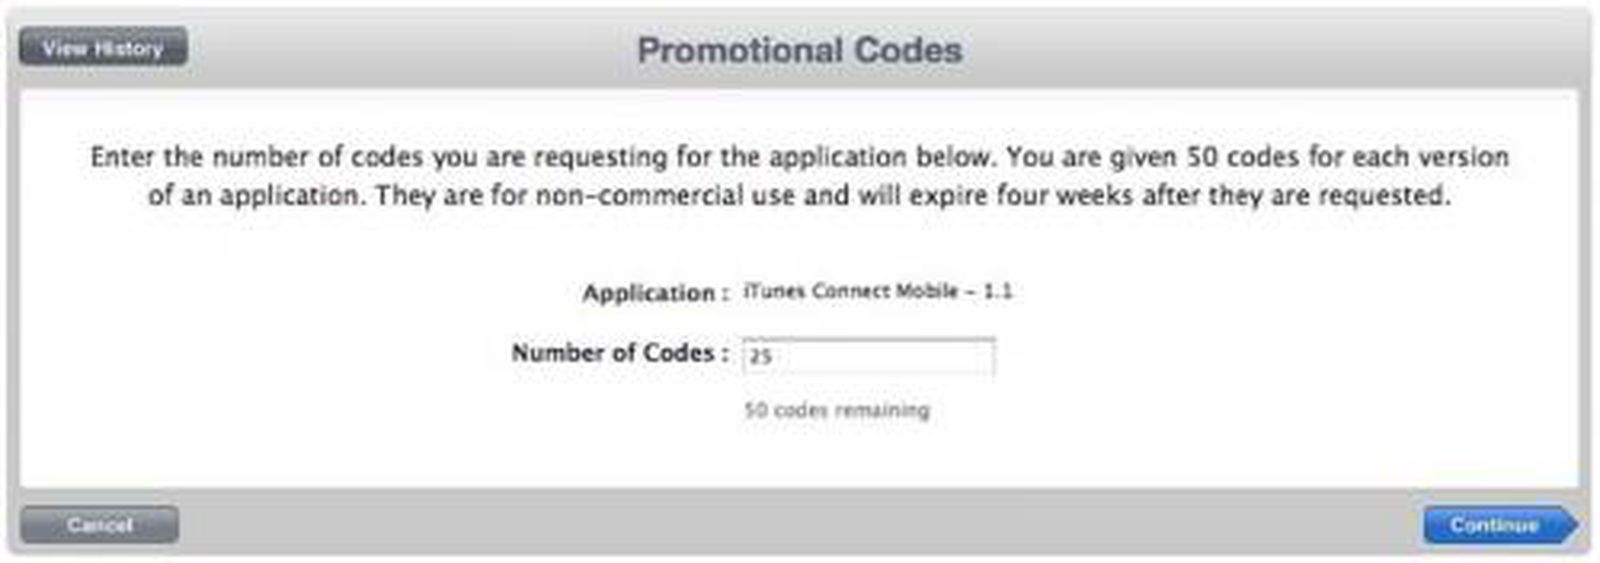 How to Redeem Promo Code in Mac App Store? - AirBeamTV